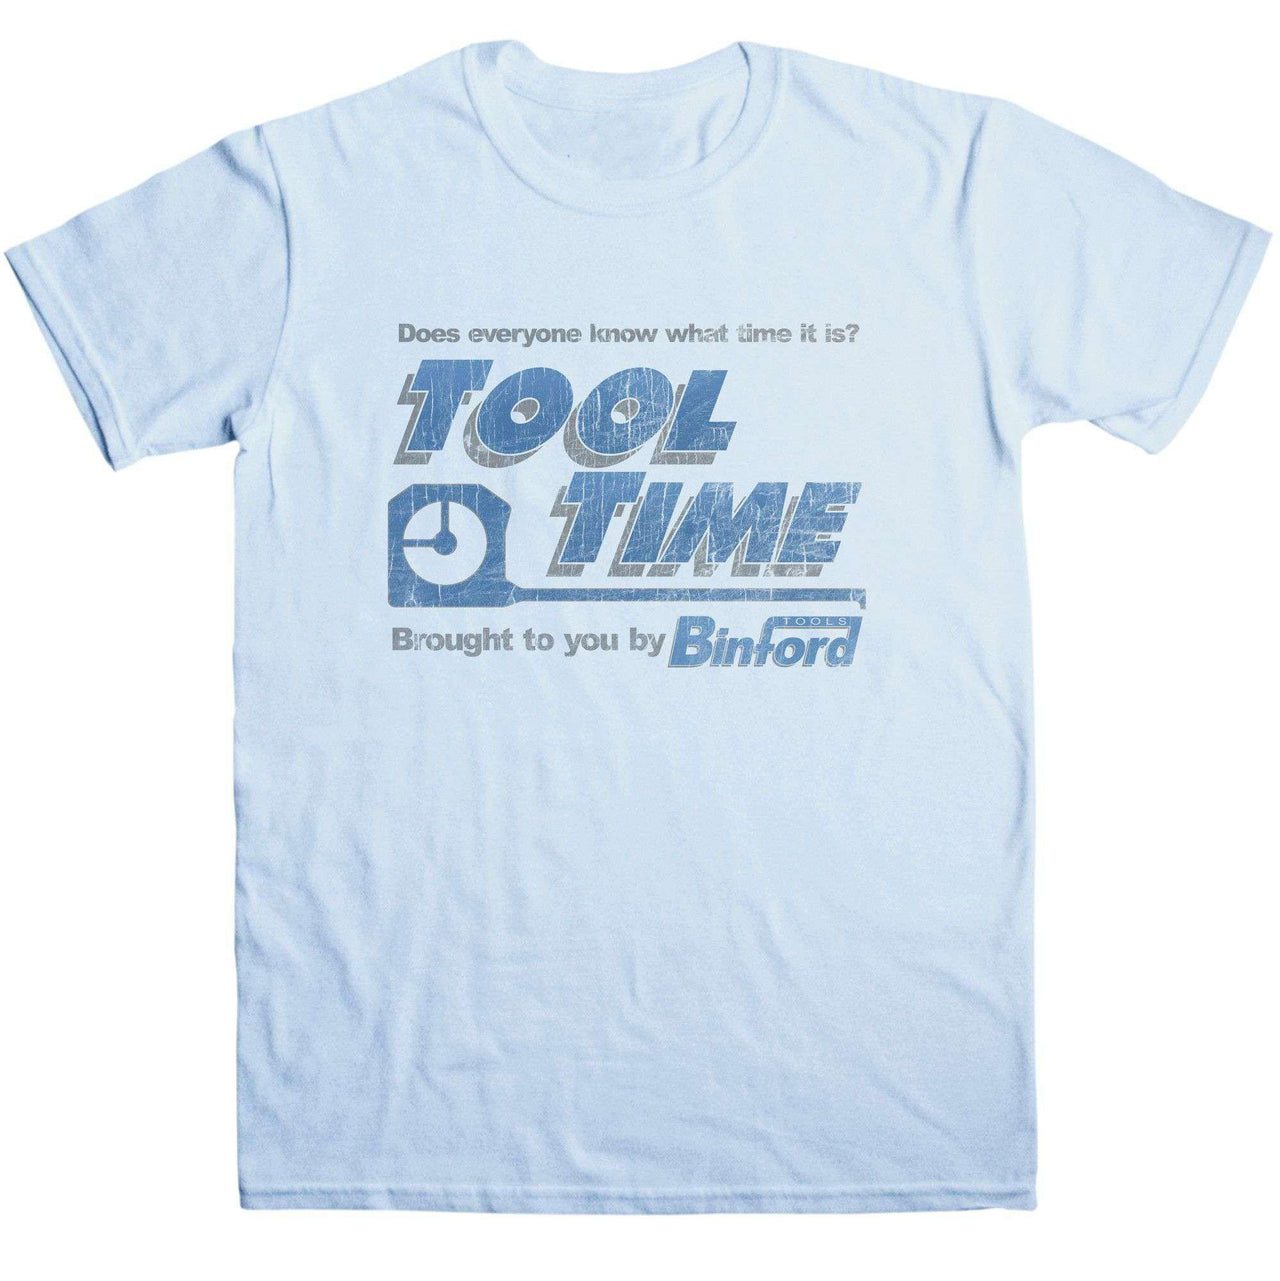 Tool Time T-Shirt For Men 8Ball